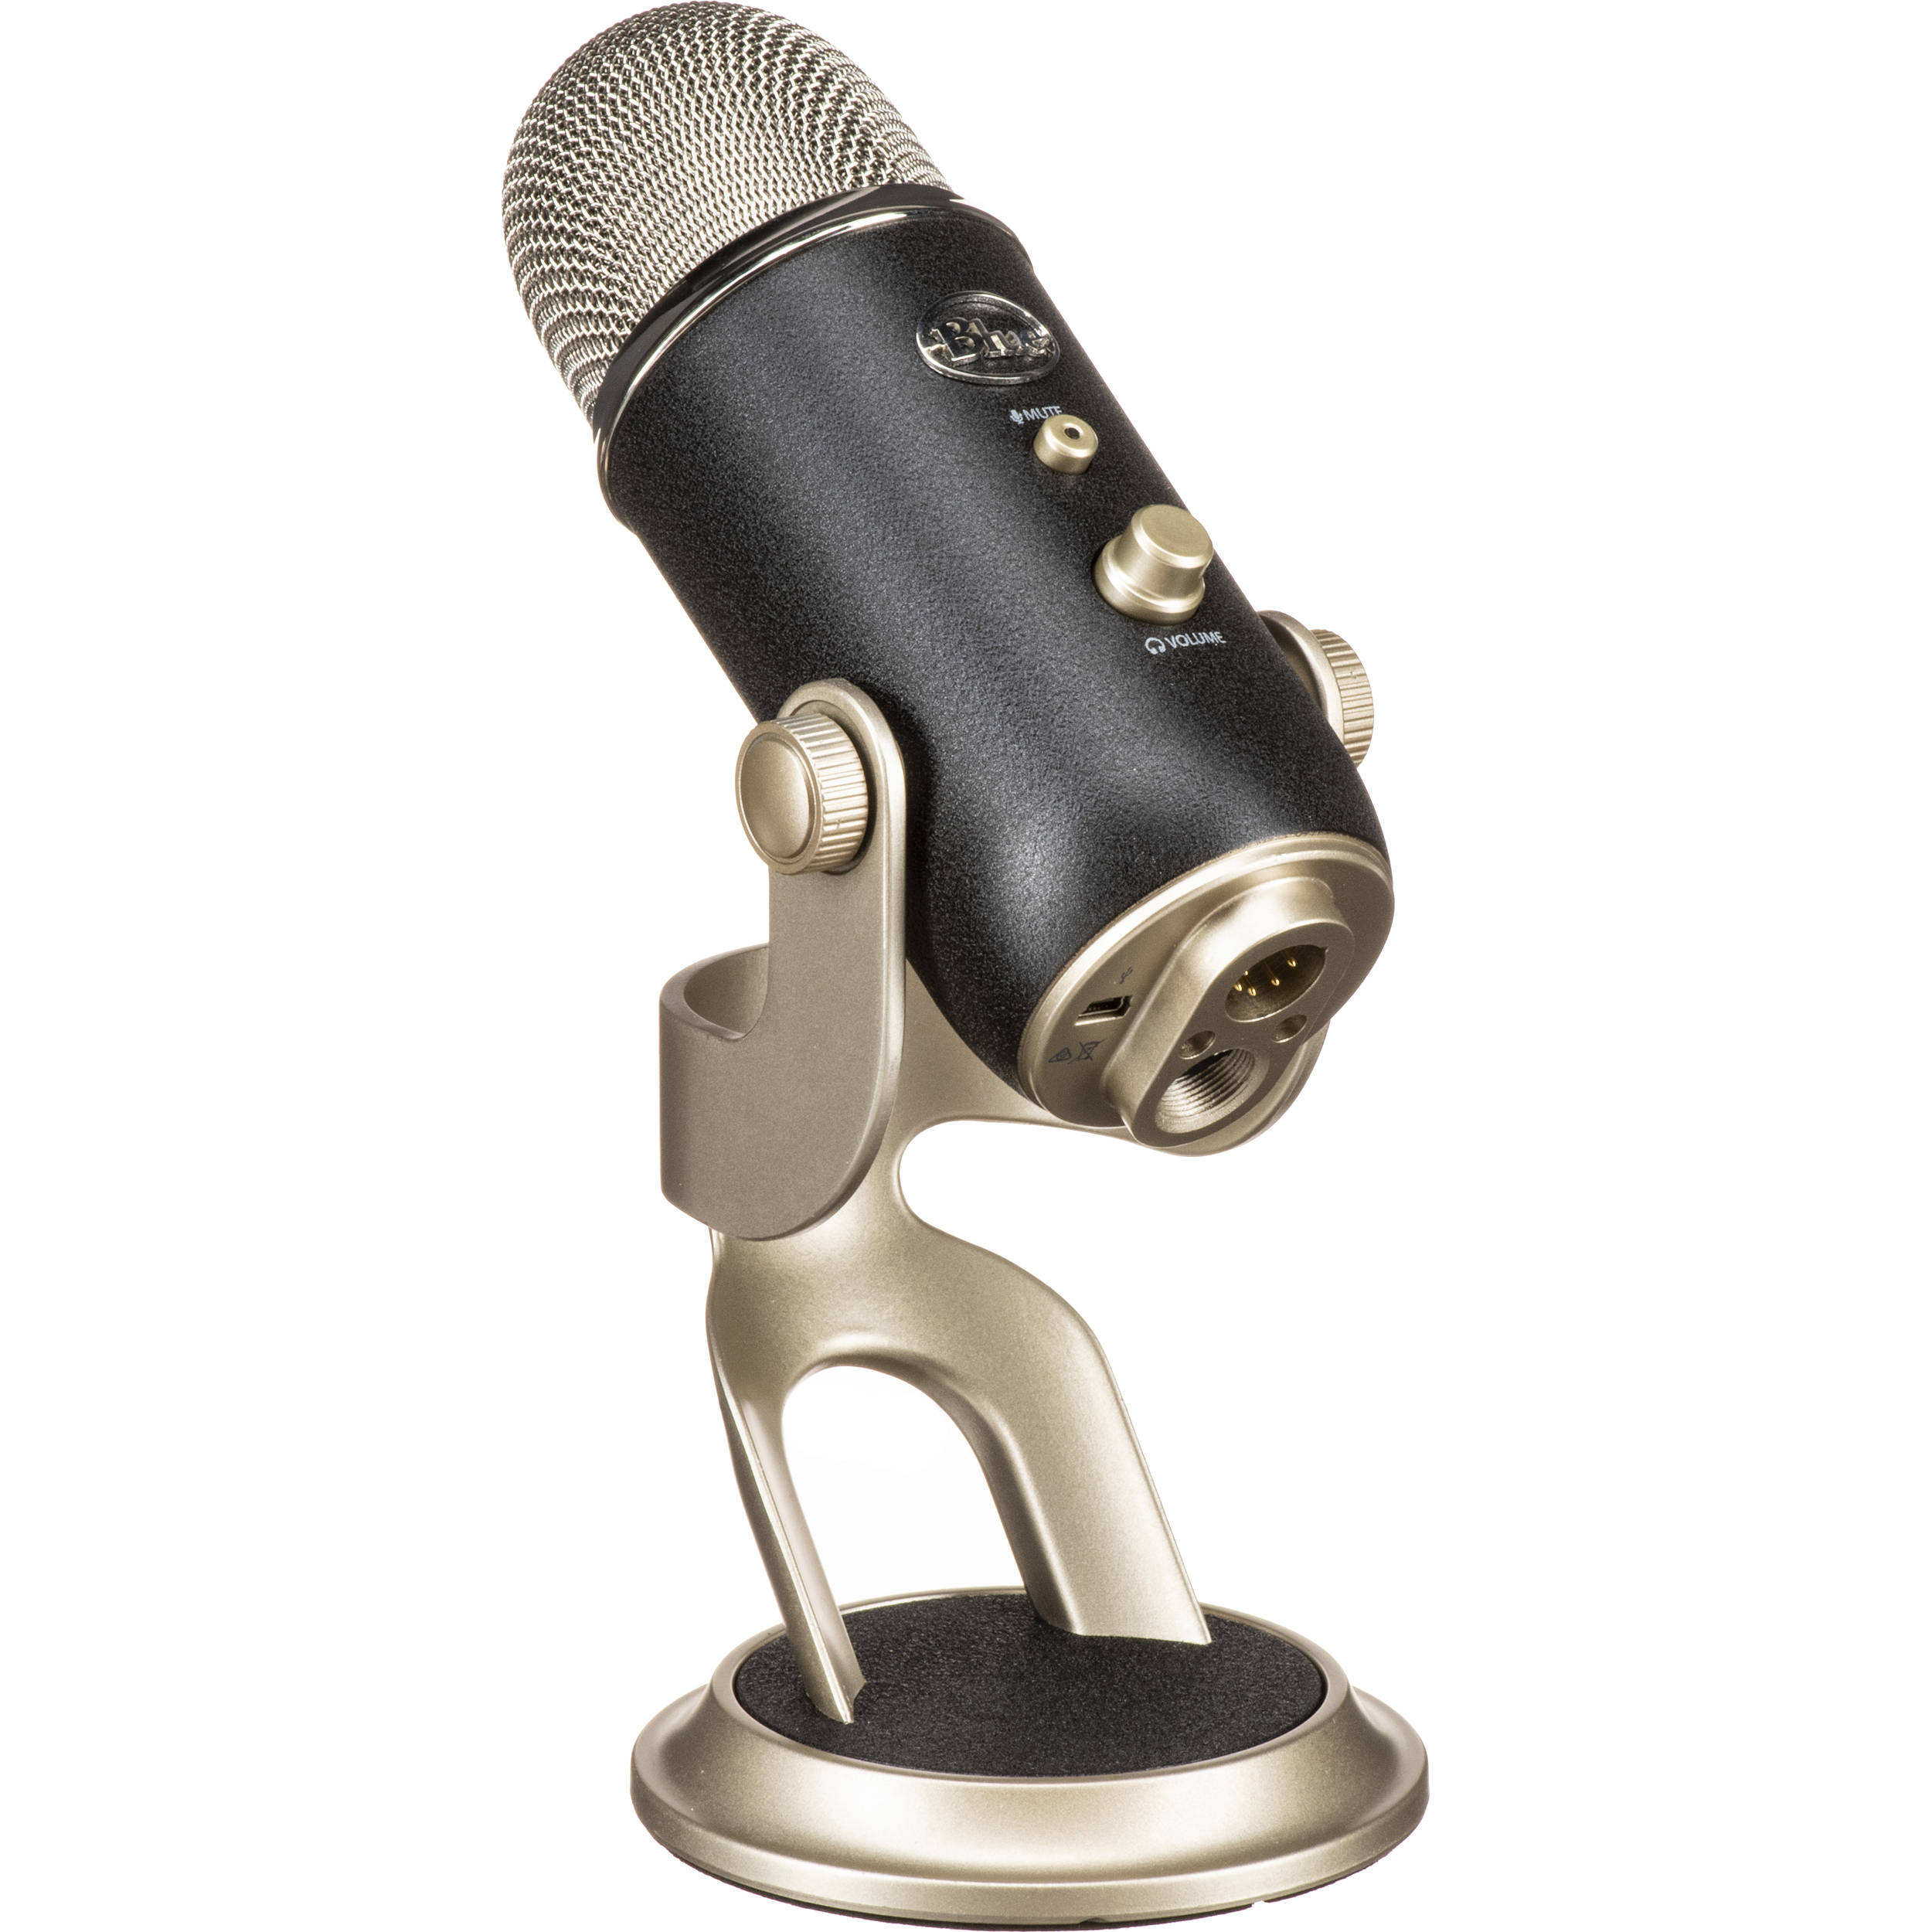 Blue Yeti Pro Microphone Value Kit B H Photo Video